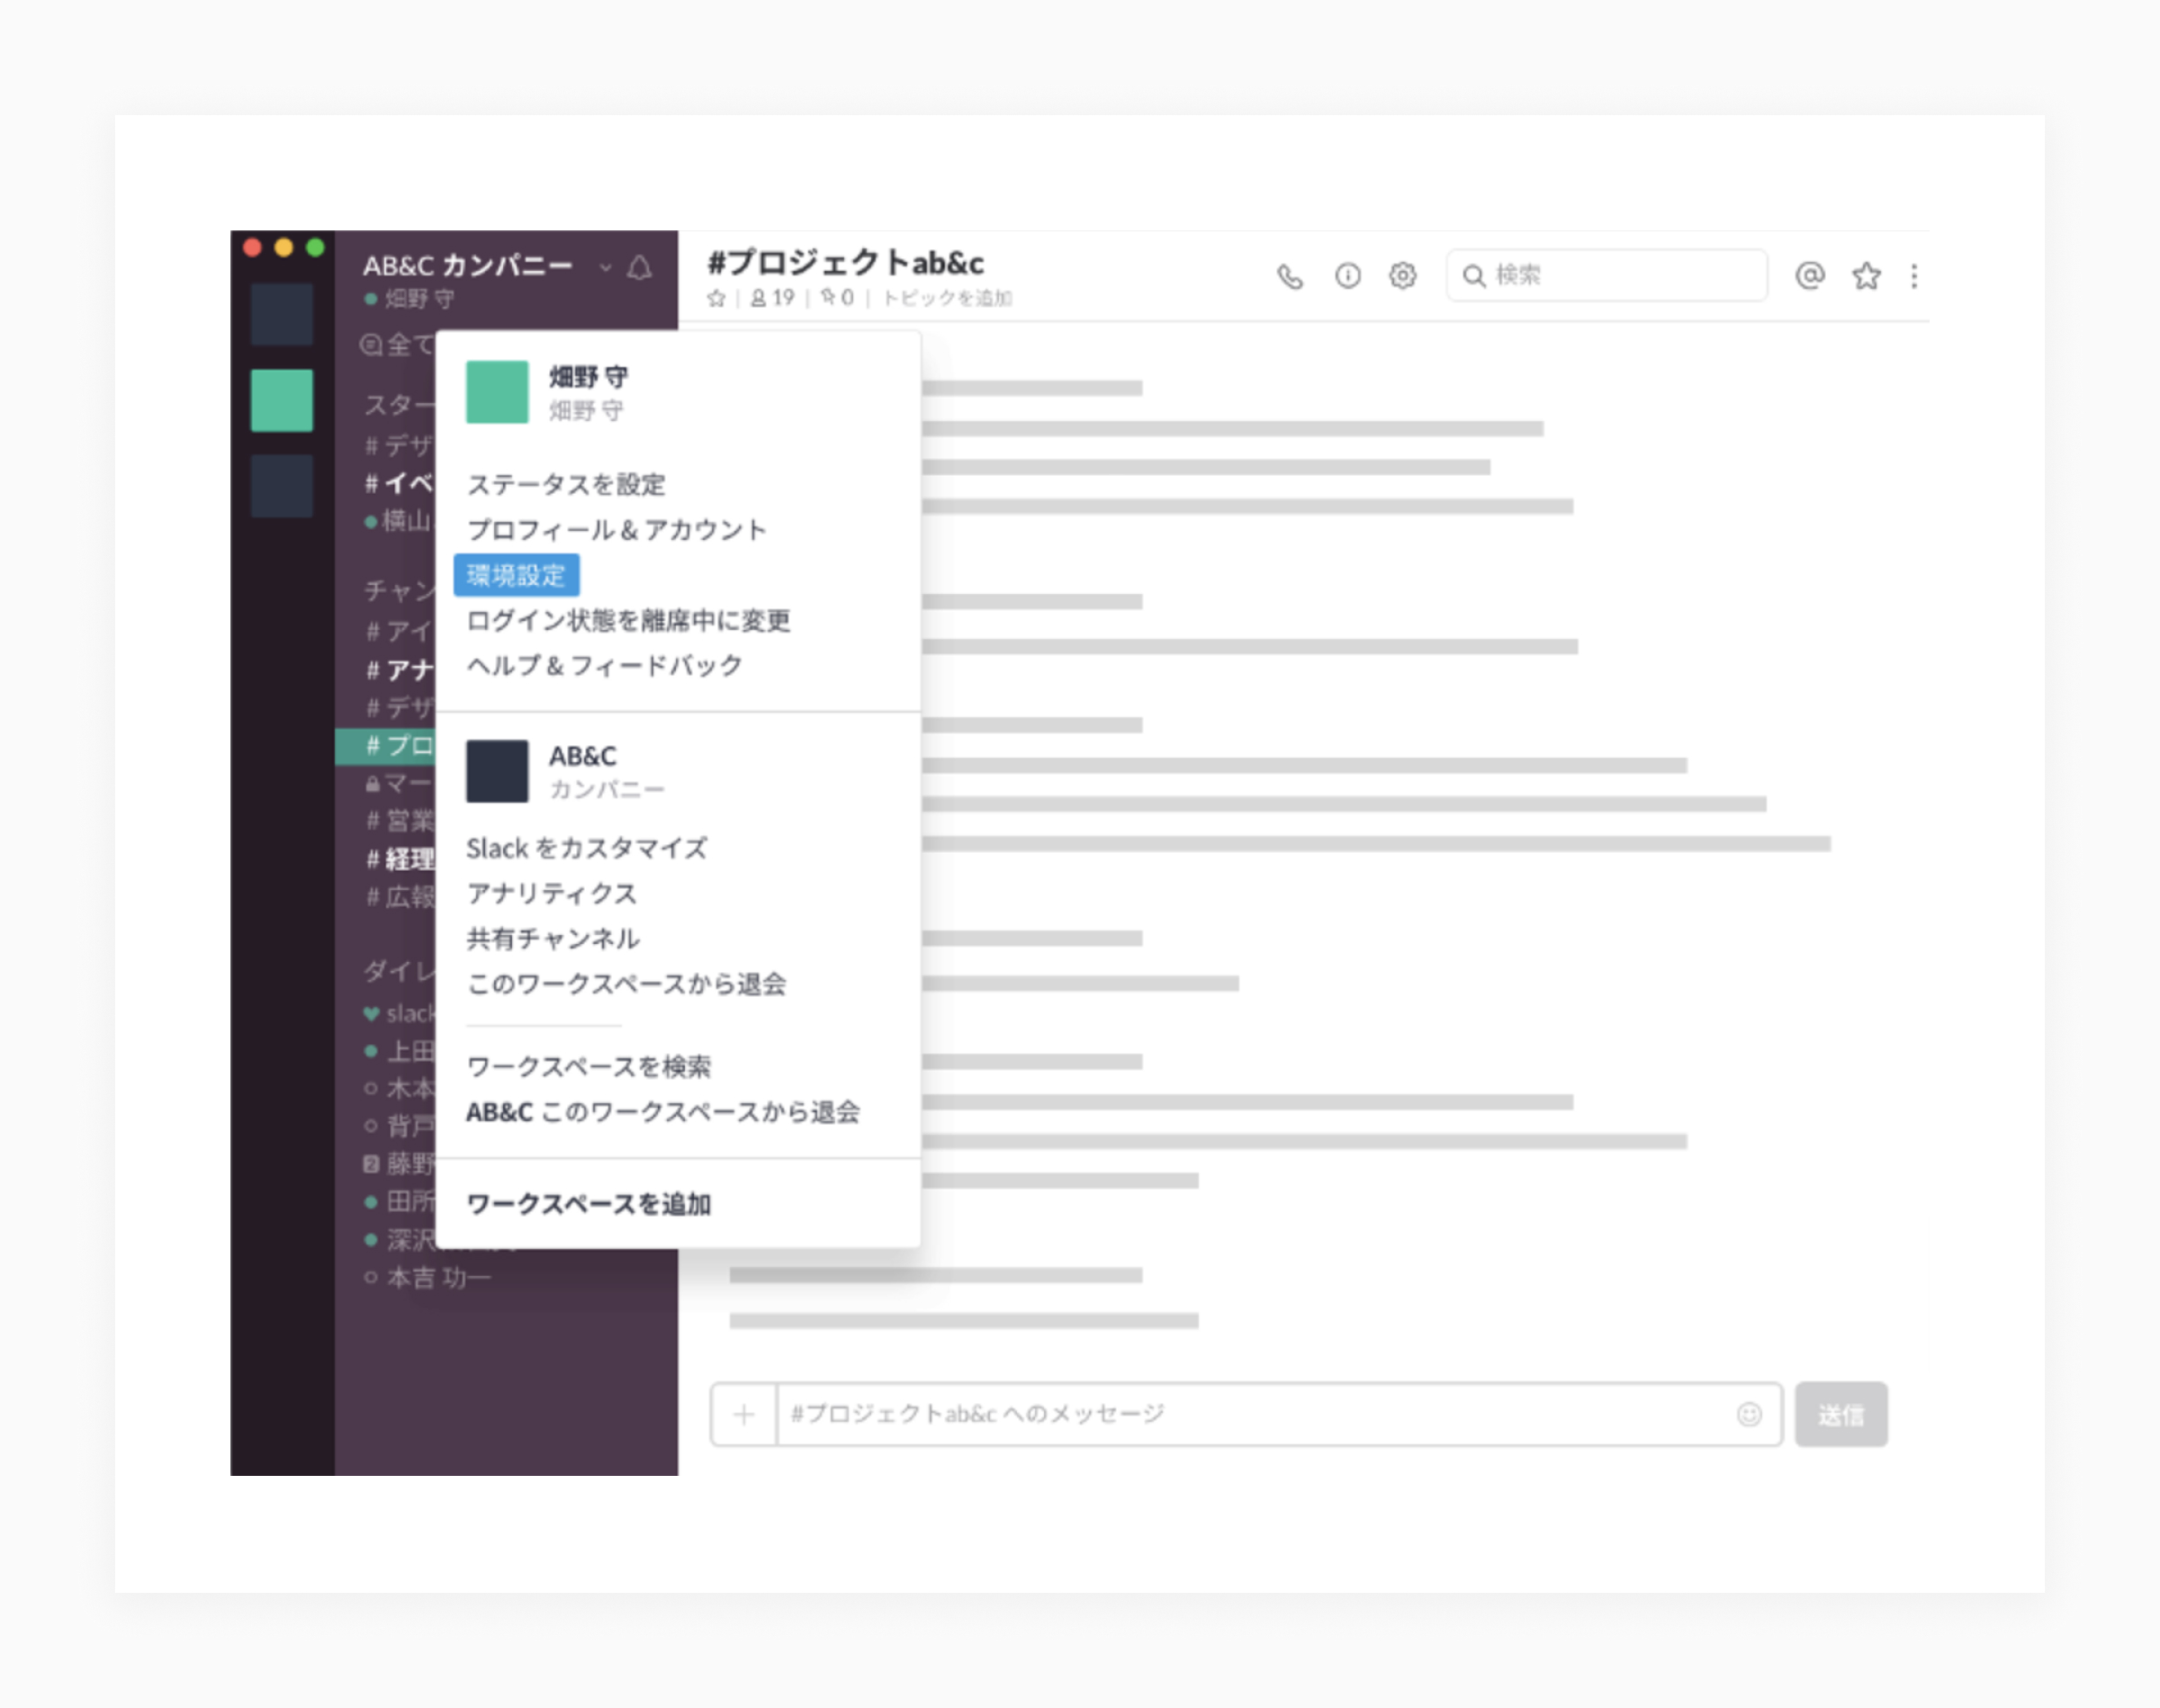 The Japanese version of Slack’s app